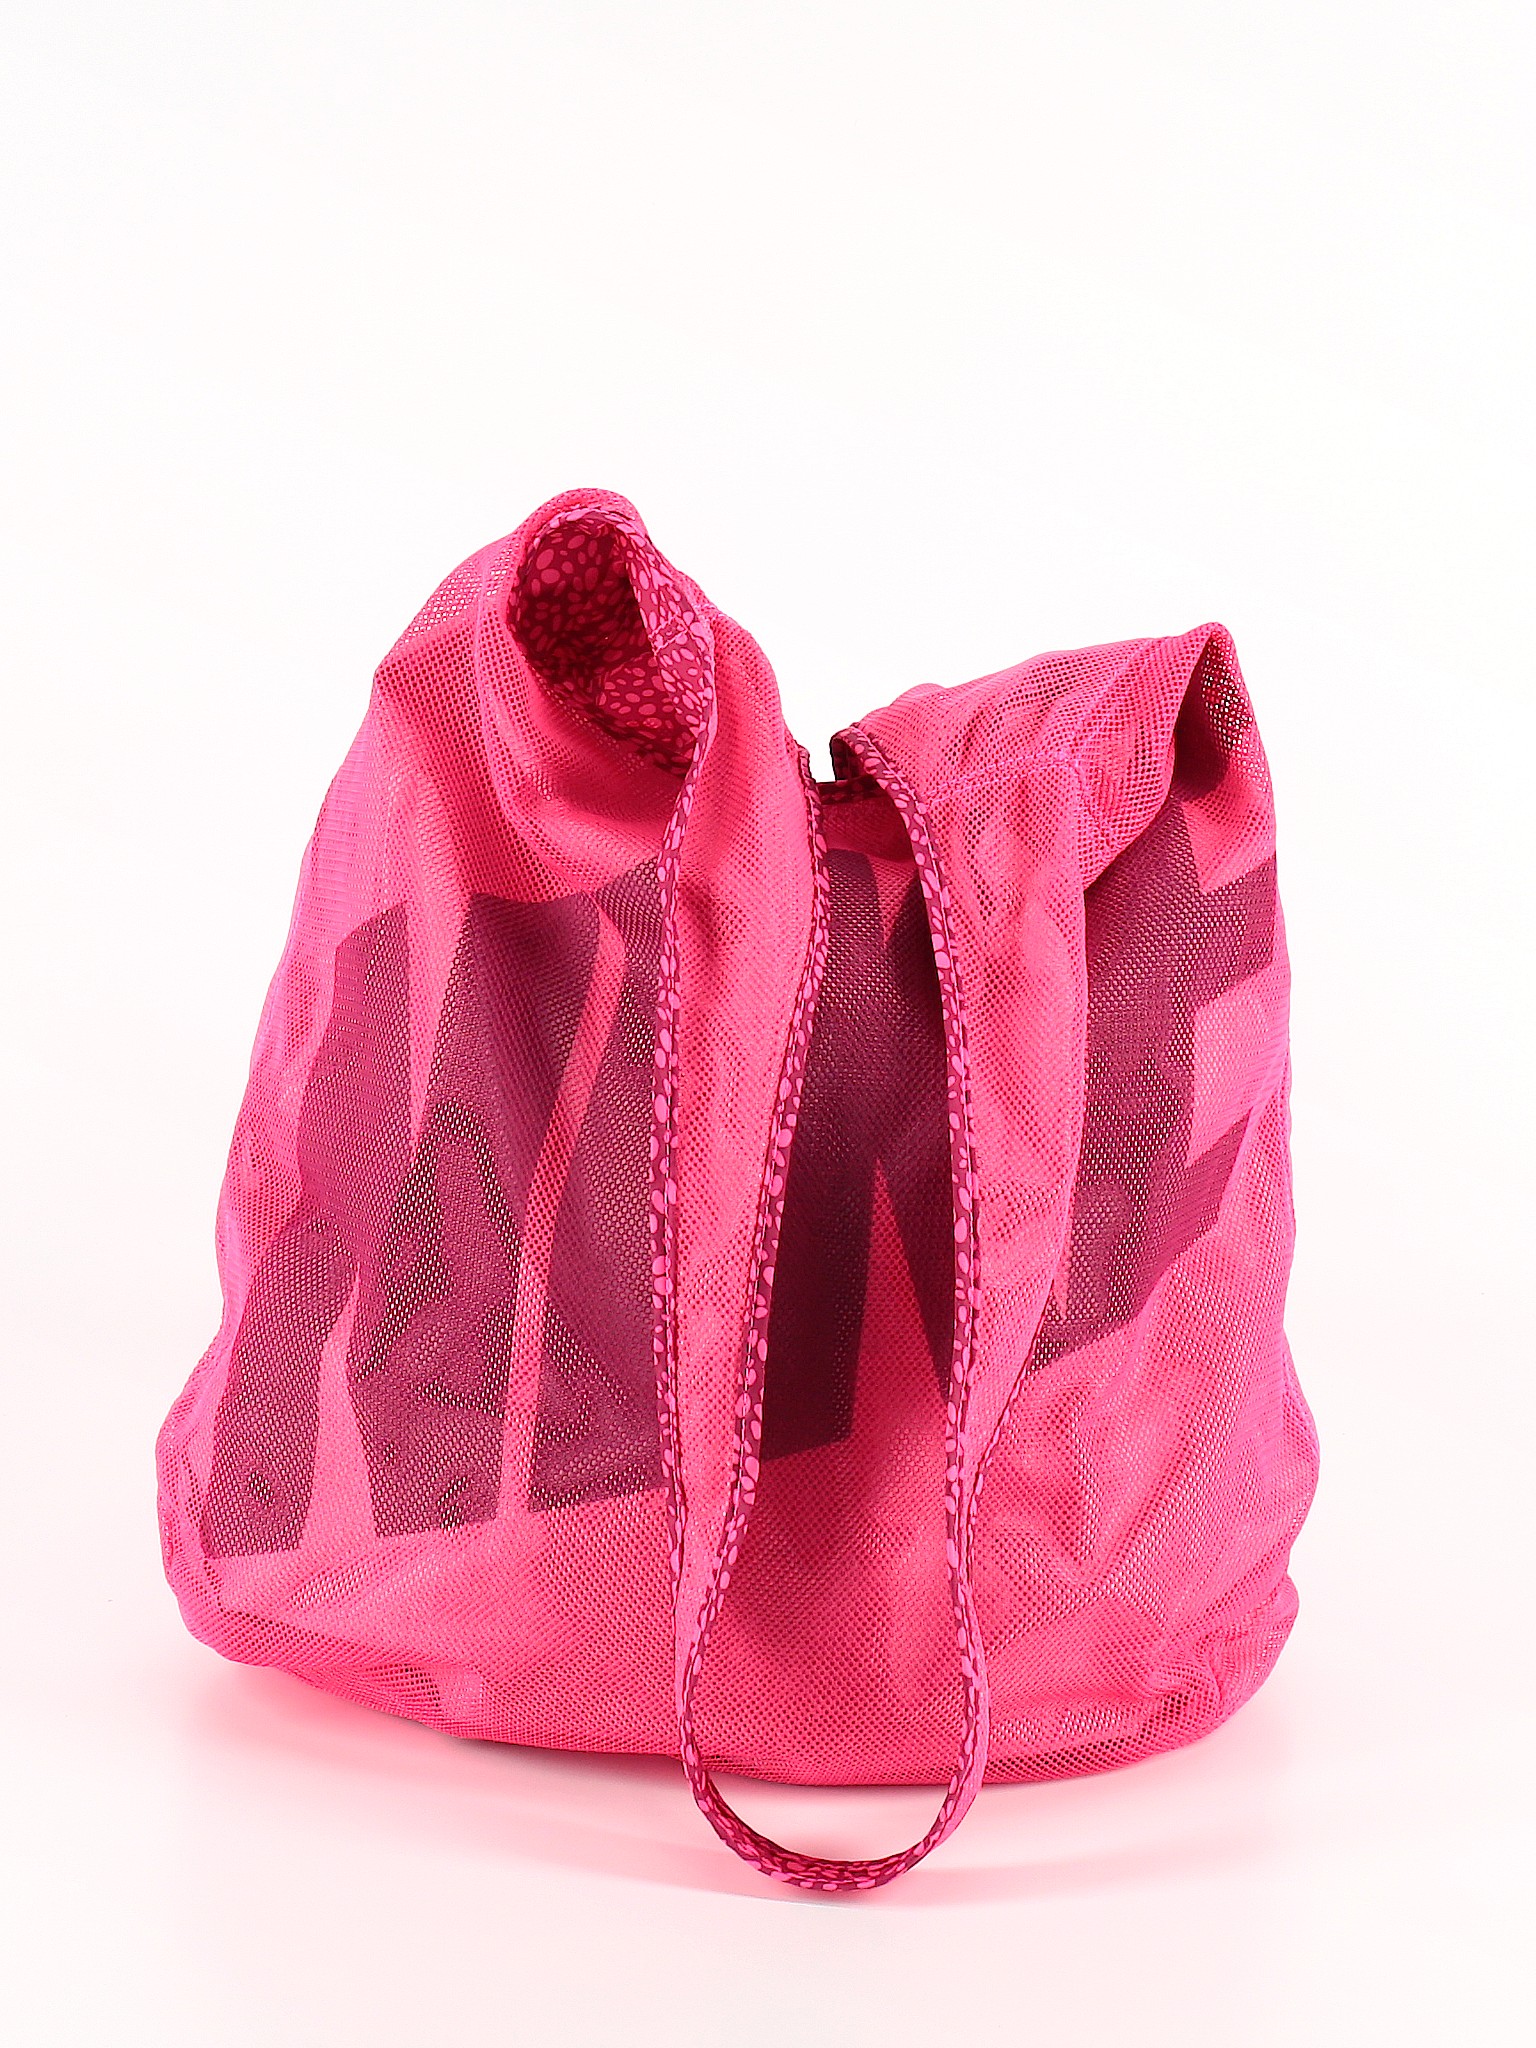 Nike Women Pink Crossbody Bag One Size | eBay